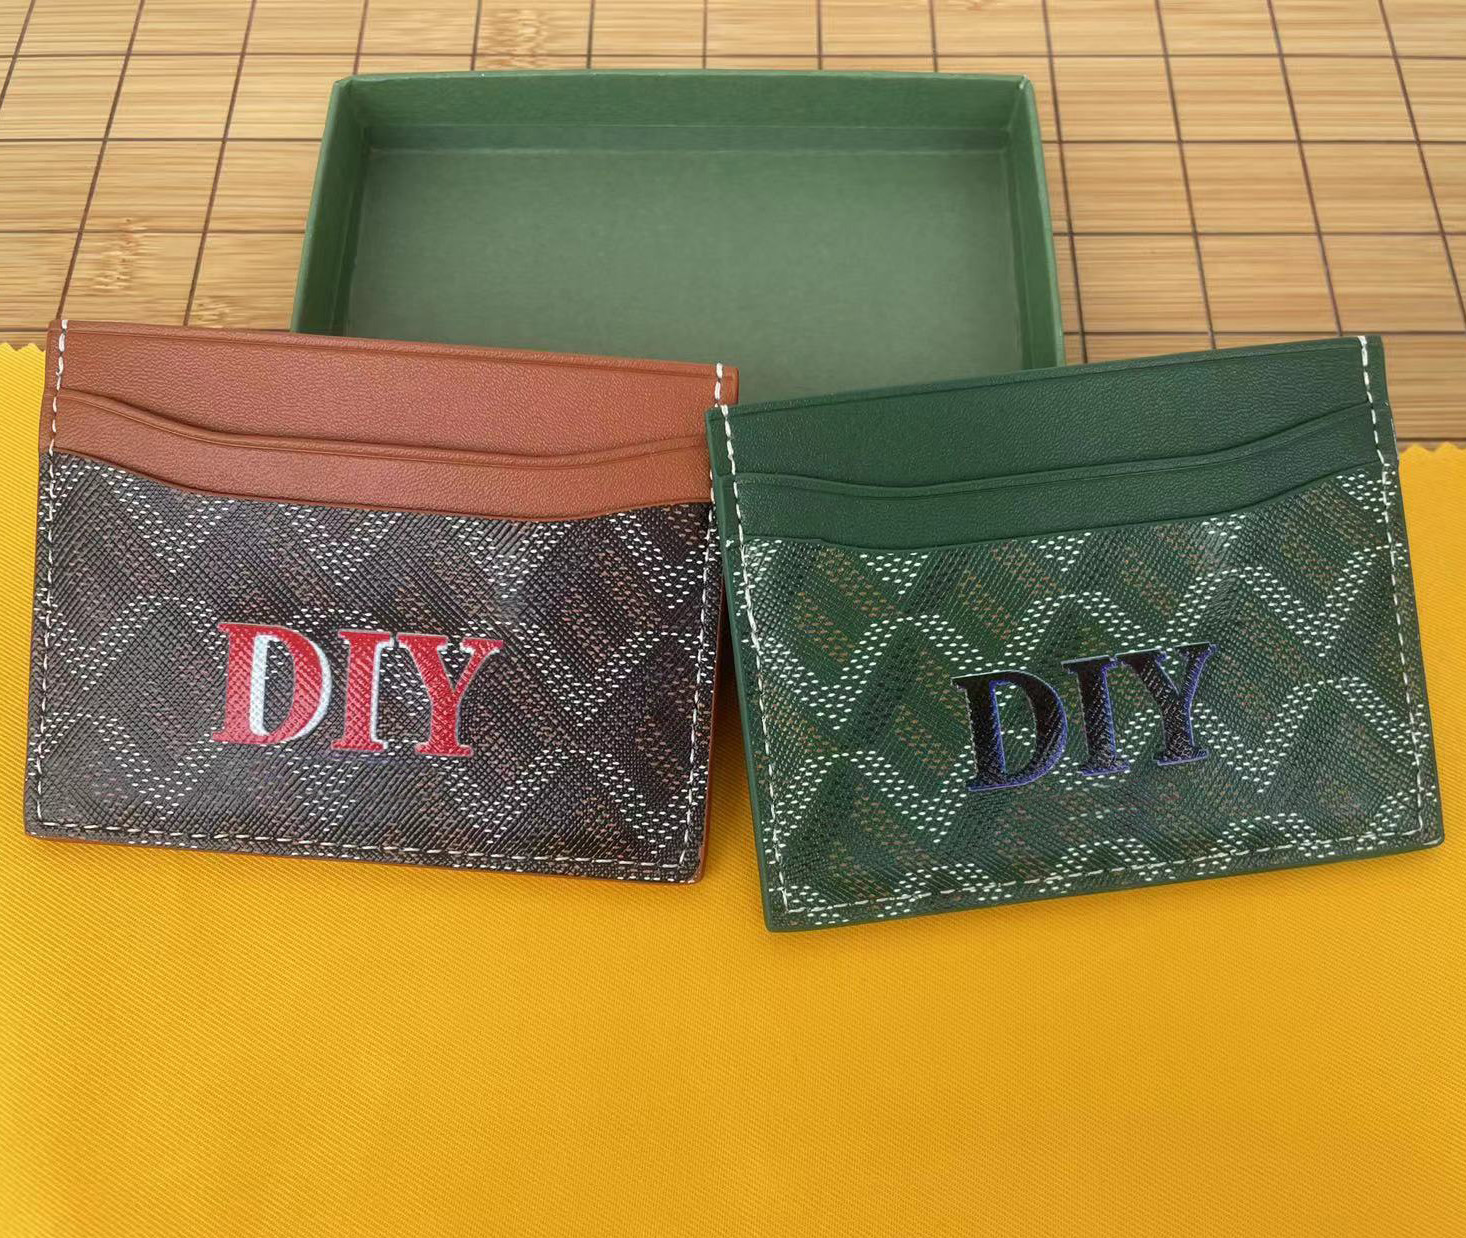 

Card Holders Clutch Bags handbag Totes DIY Do It Yourself handmade Customized handbag personalized bag customizing initials stripes B1, Black